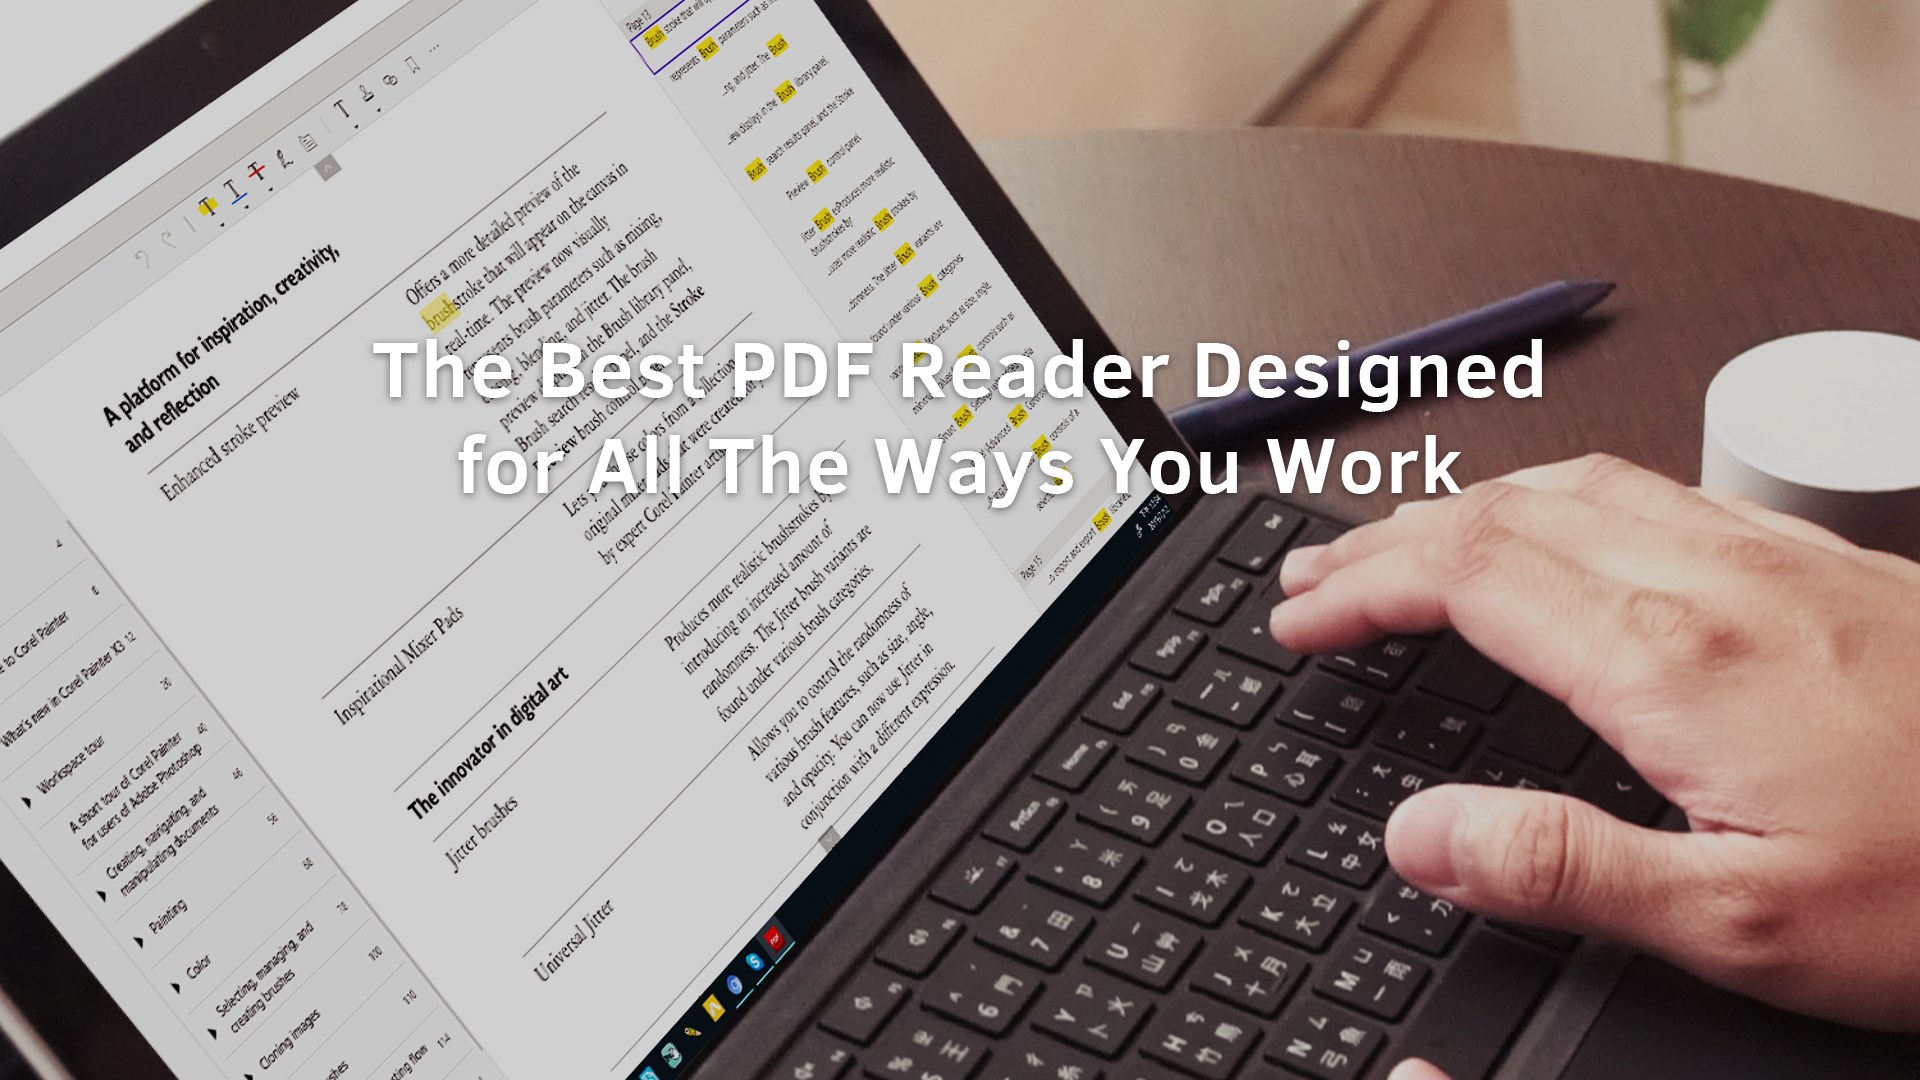 Adobe reader for macbook pro